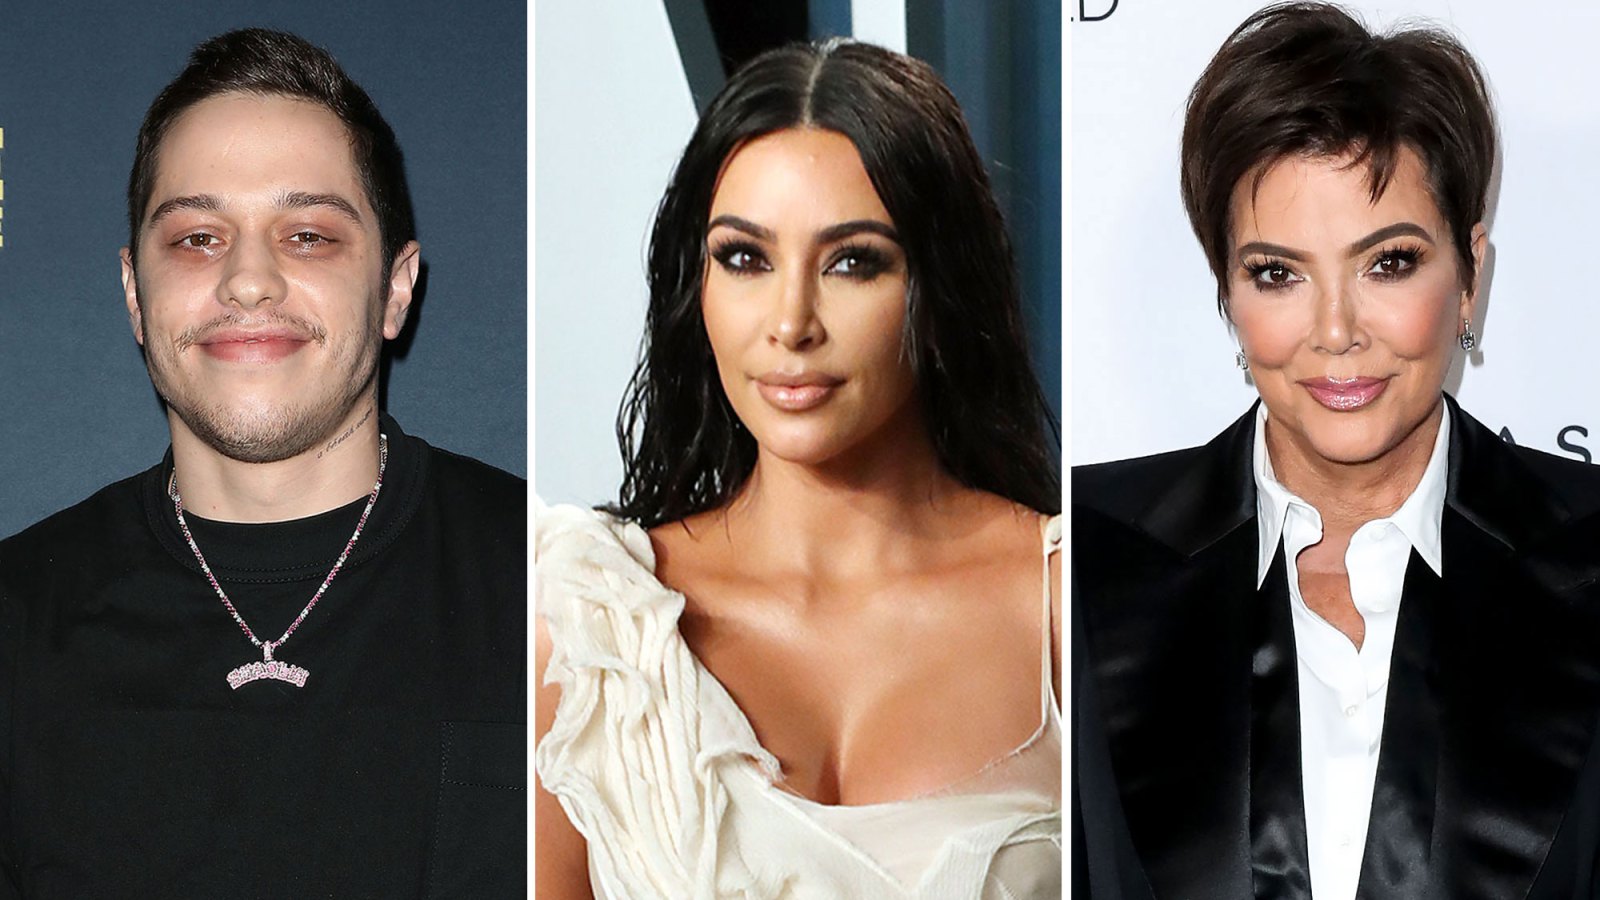 Pete Davidson Celebrated His 28th Birthday With Kim Kardashian and Kris Jenner Amid Romance Rumors